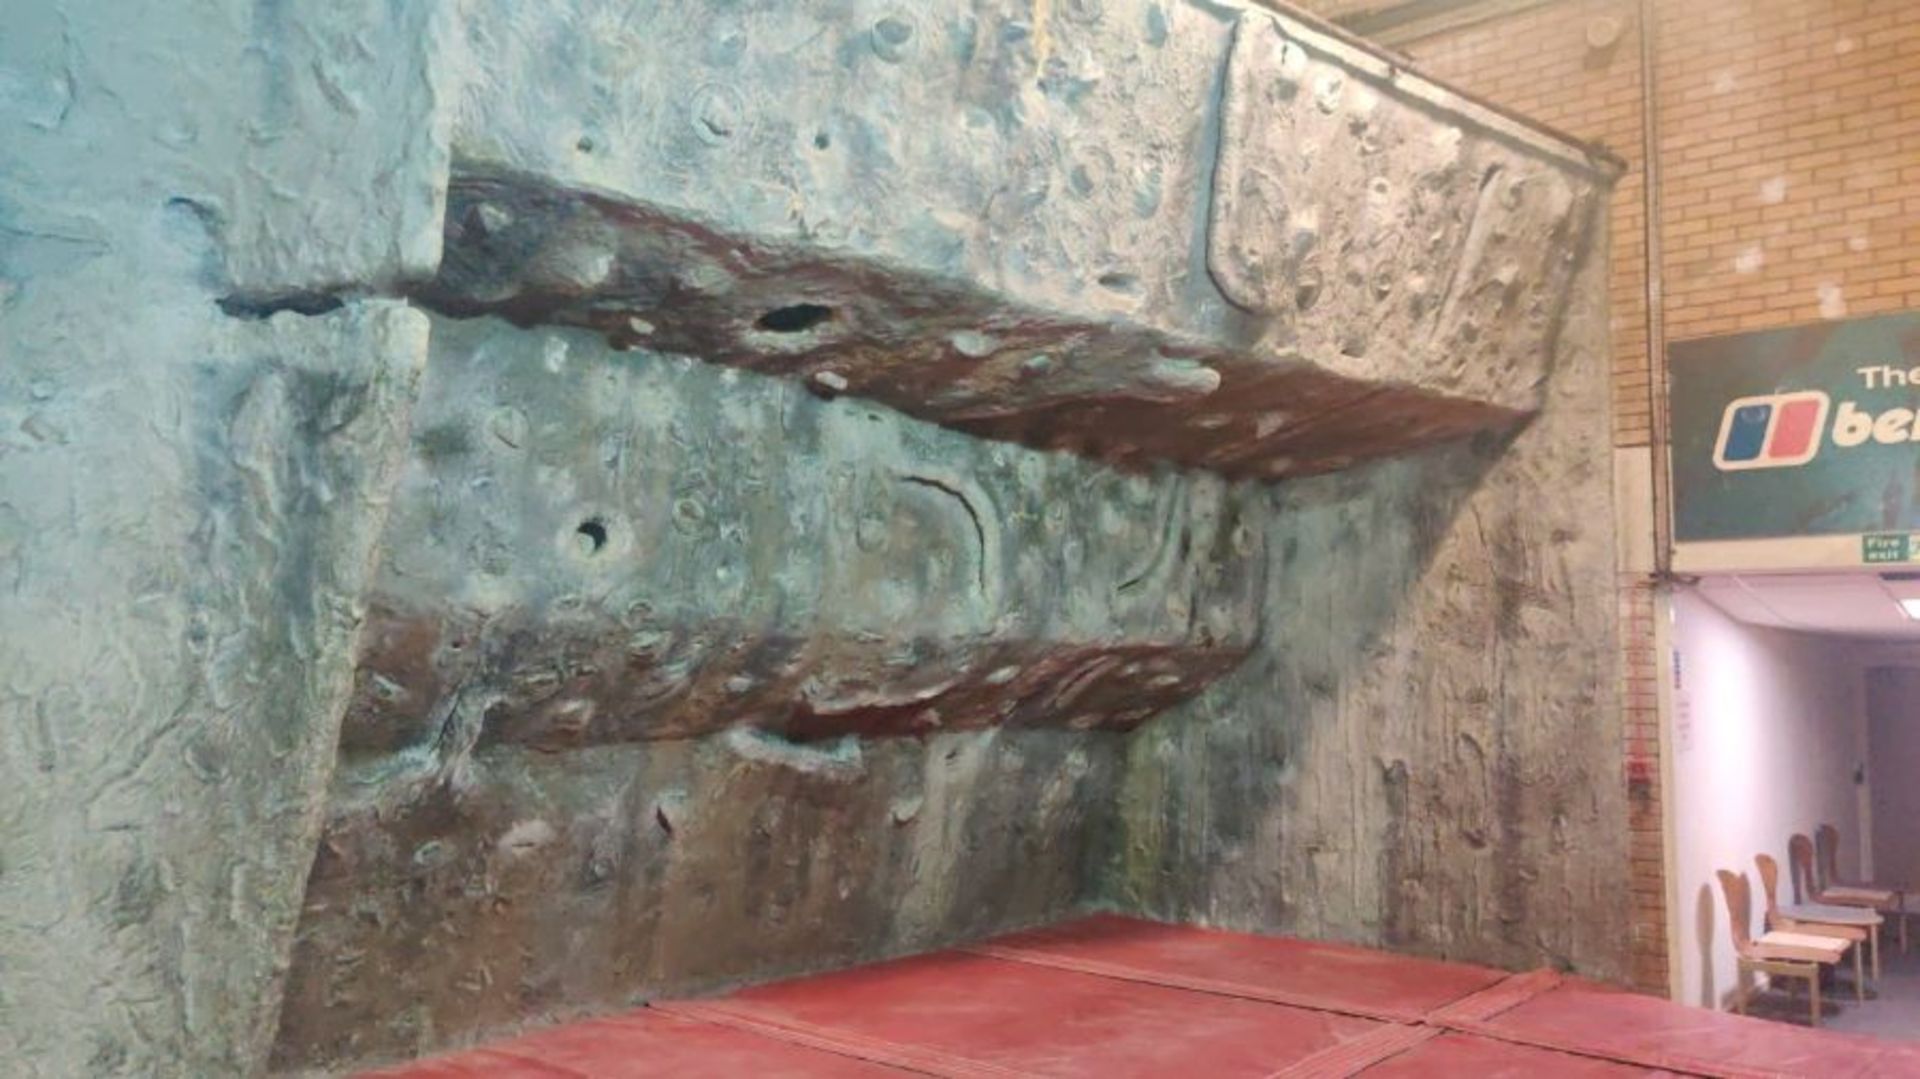 Berghaus climbing wall - Image 3 of 22